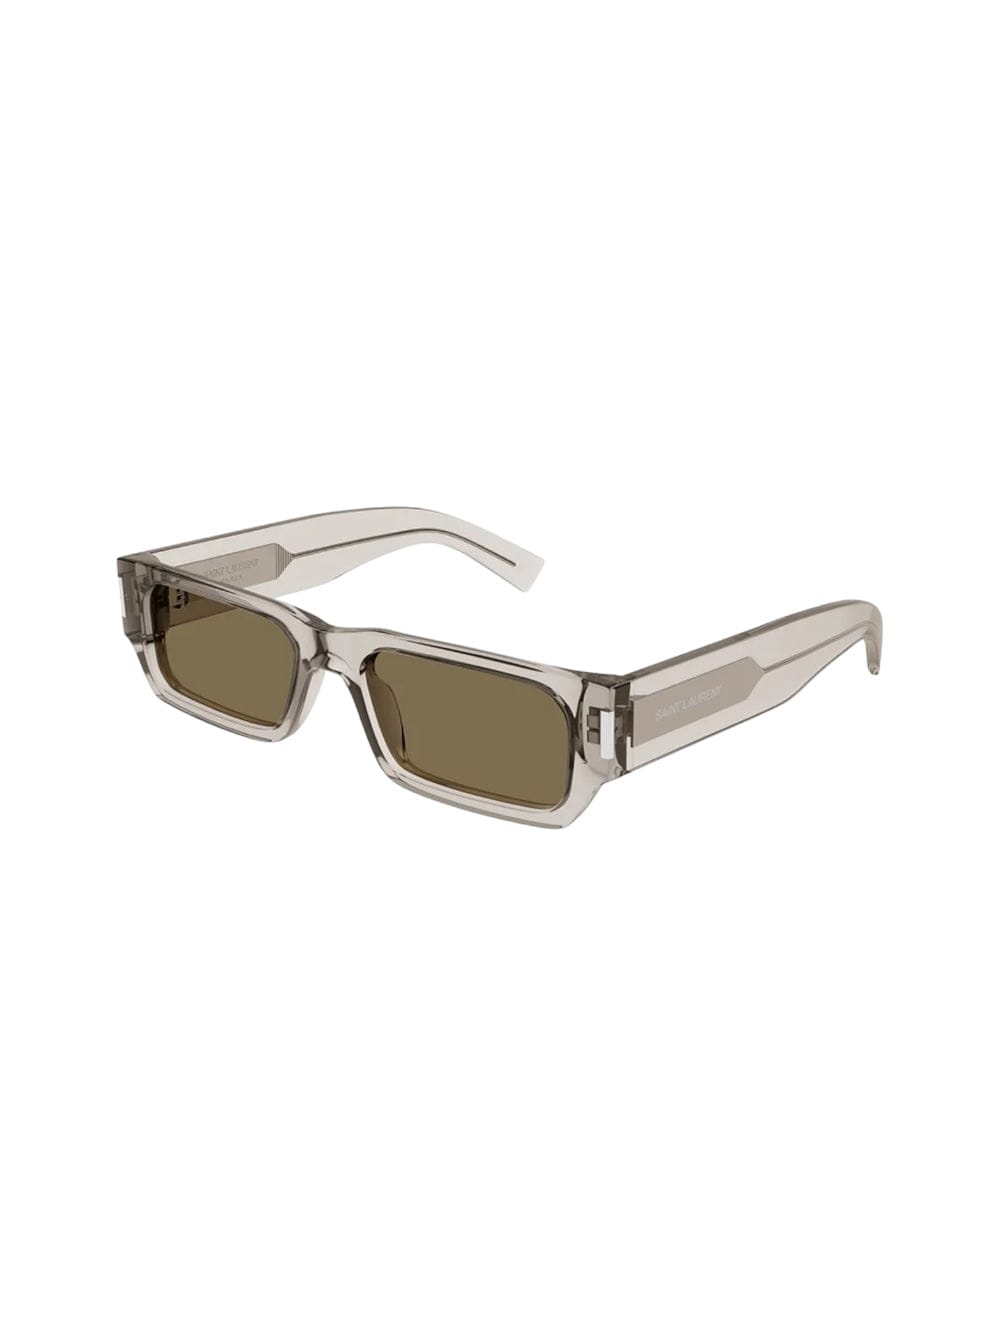 Sl 660 - Beige Sunglasses